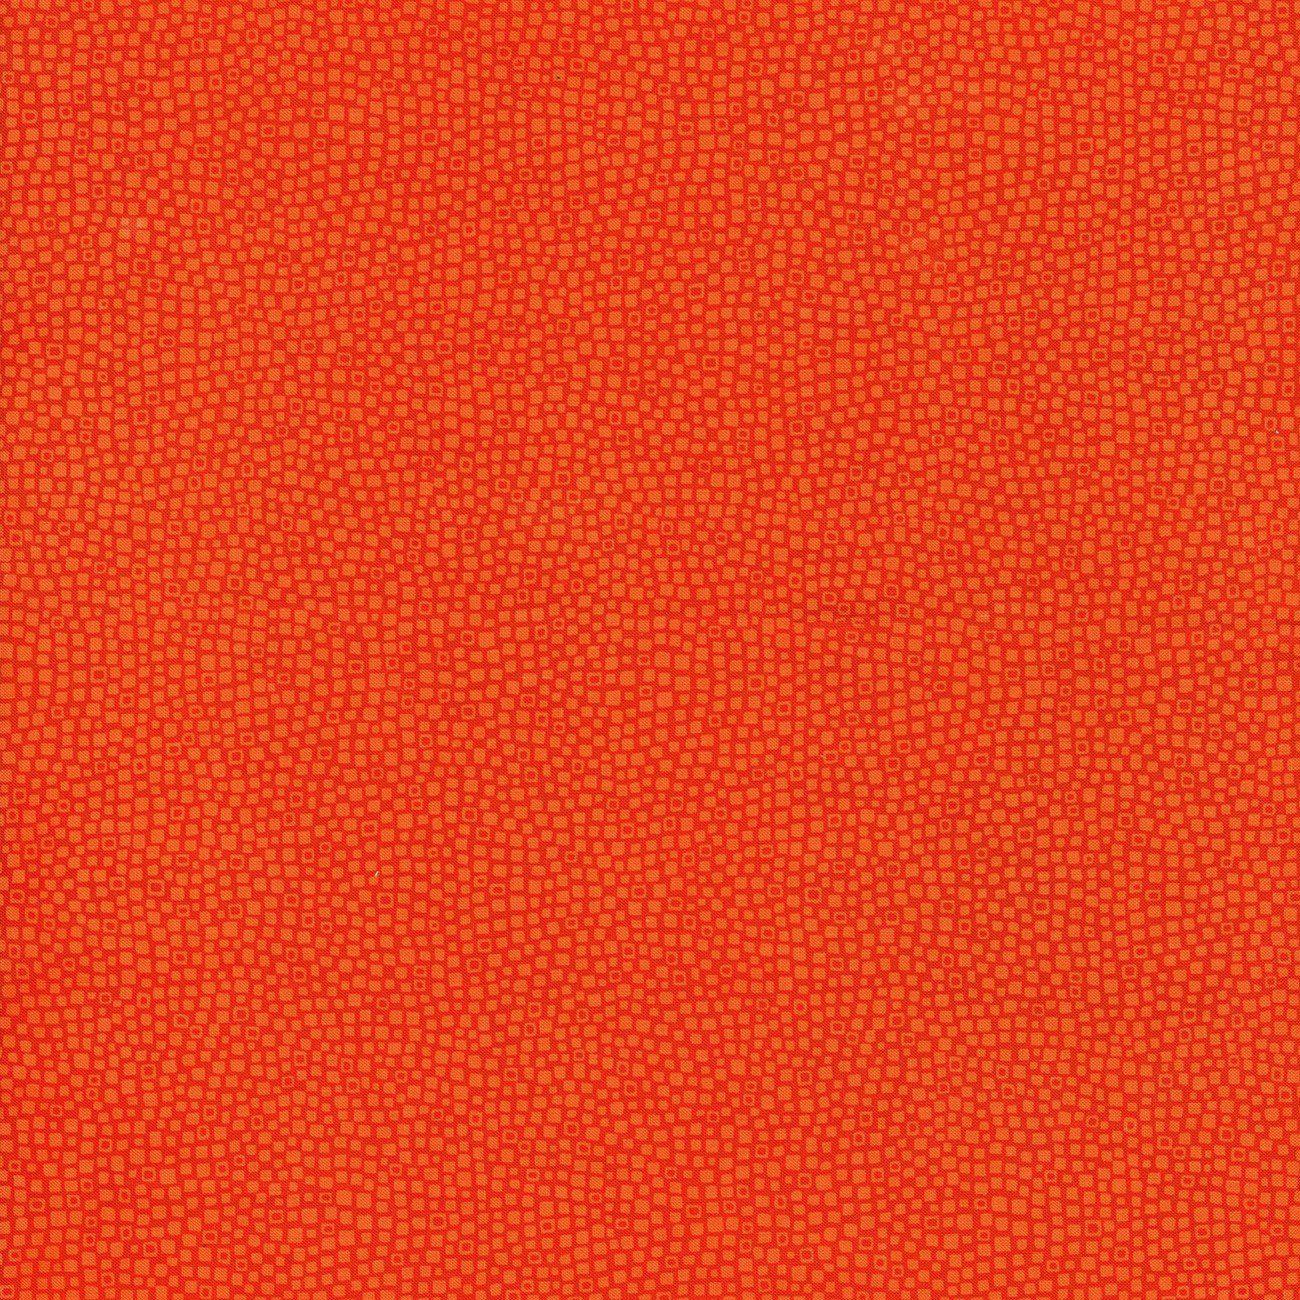 Blockbuster Basics Orange Fabric